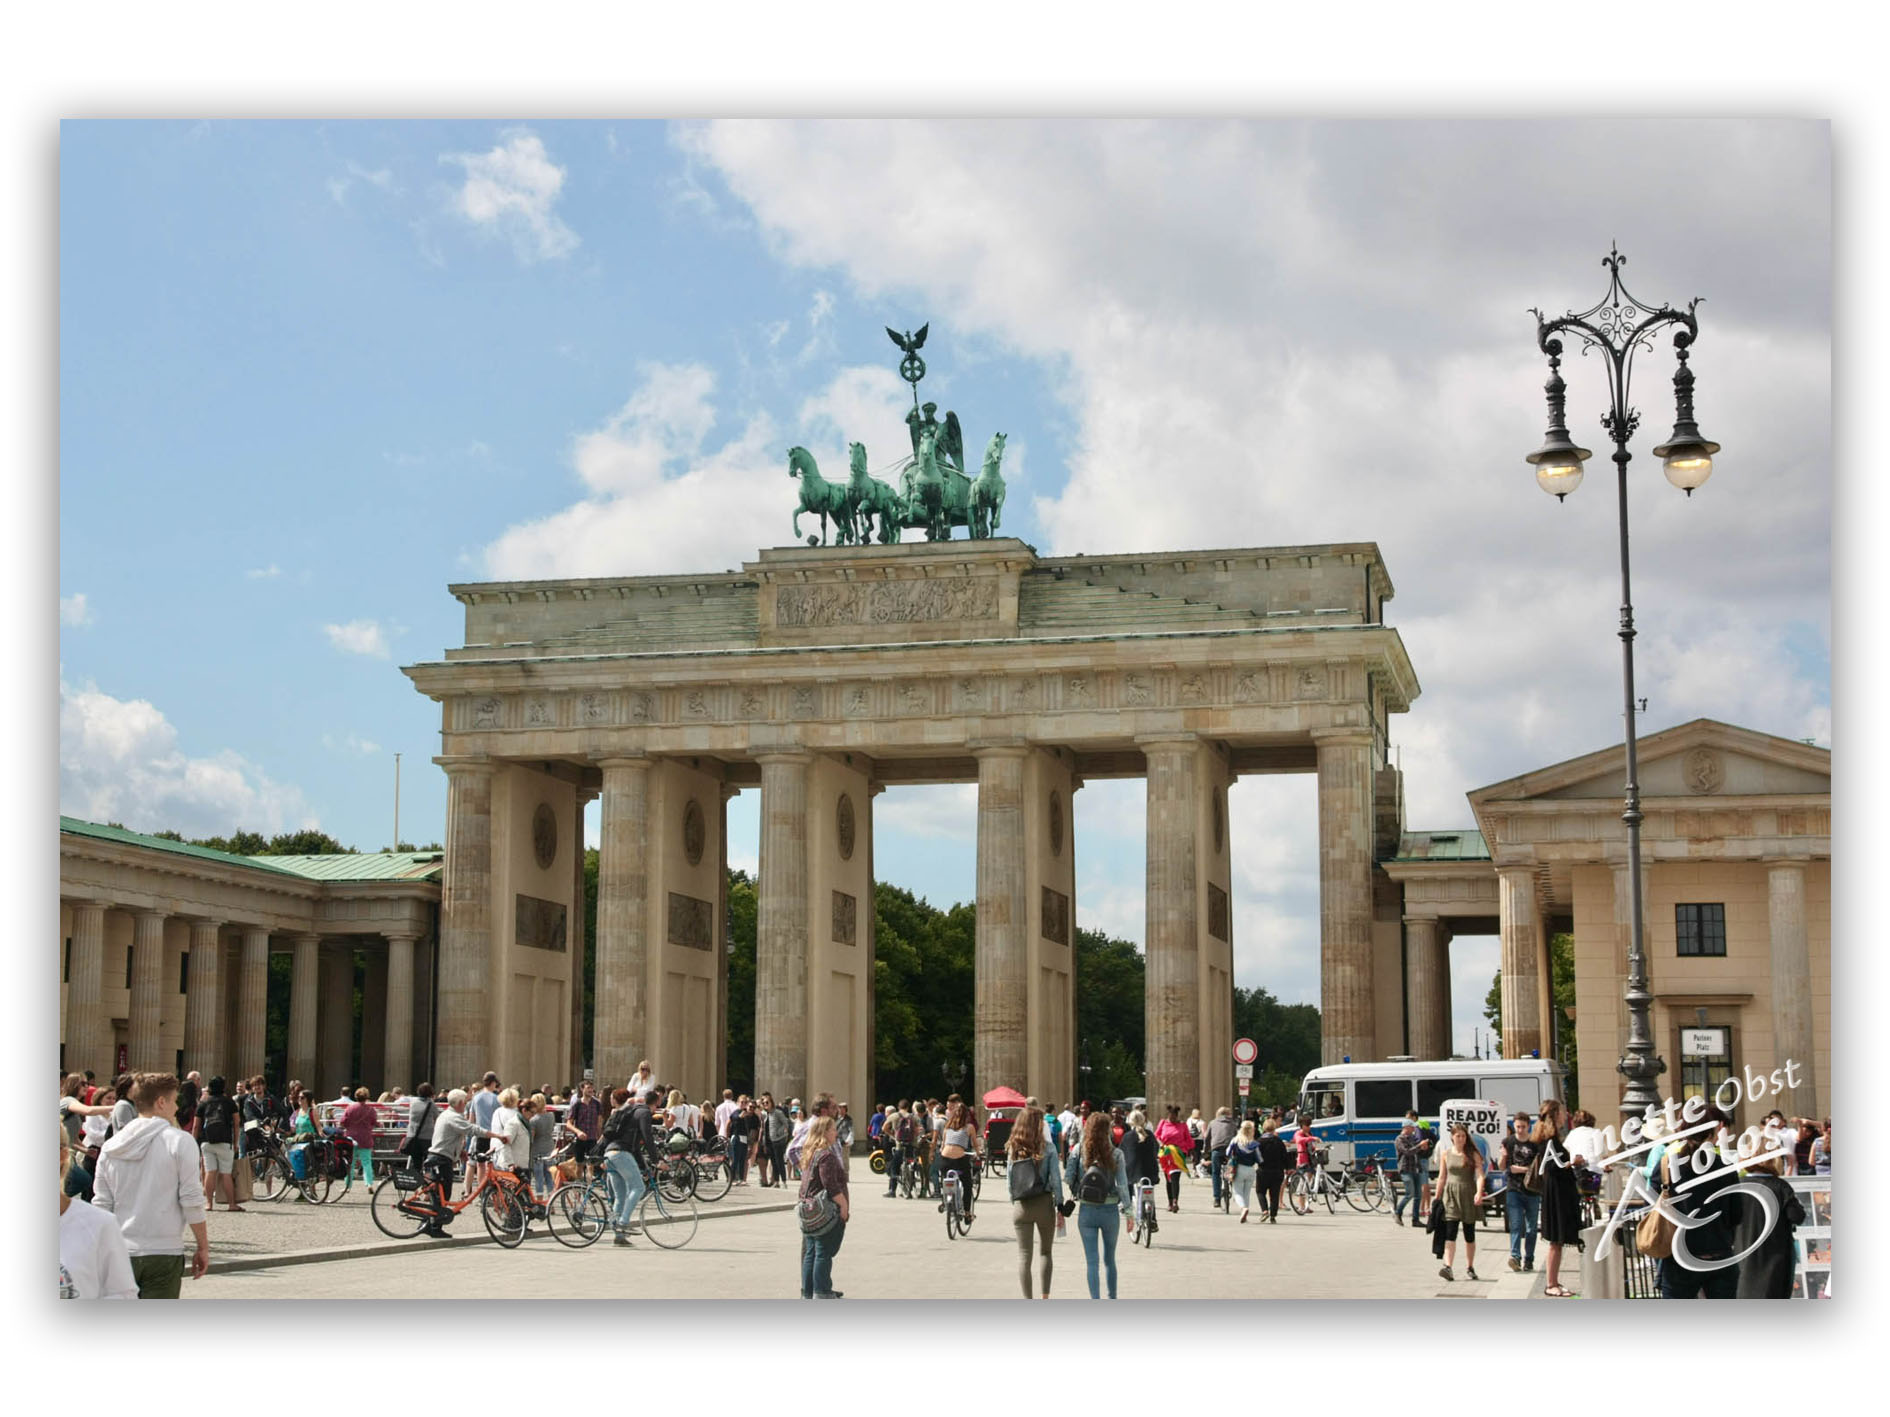 Berlin (Brandenburger Tor)